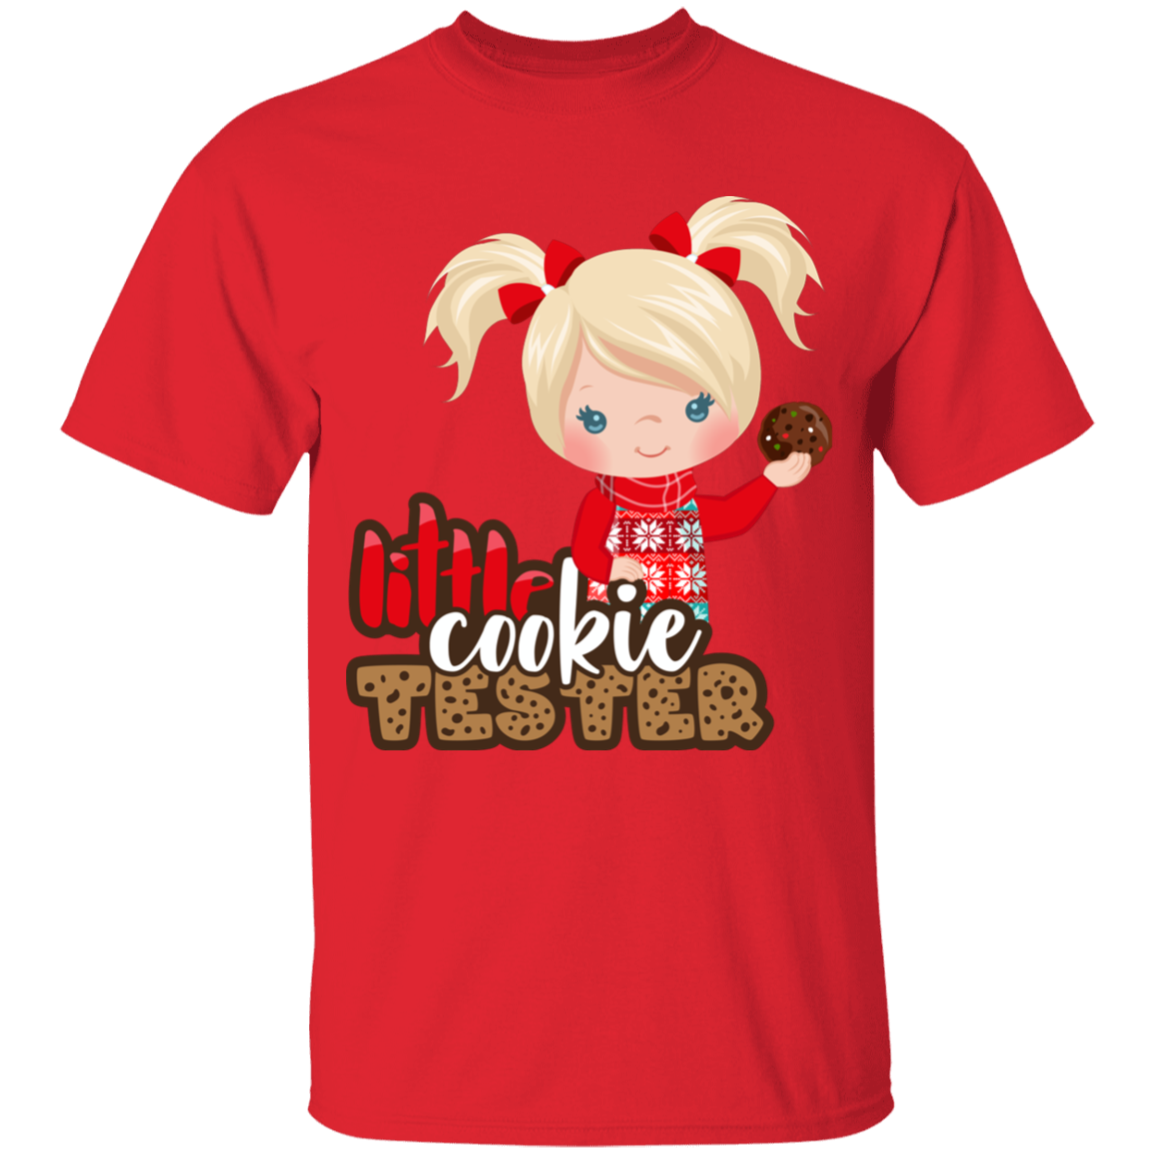 Little Cookie Tester Blonde Hair Girl 100% Cotton T-Shirt